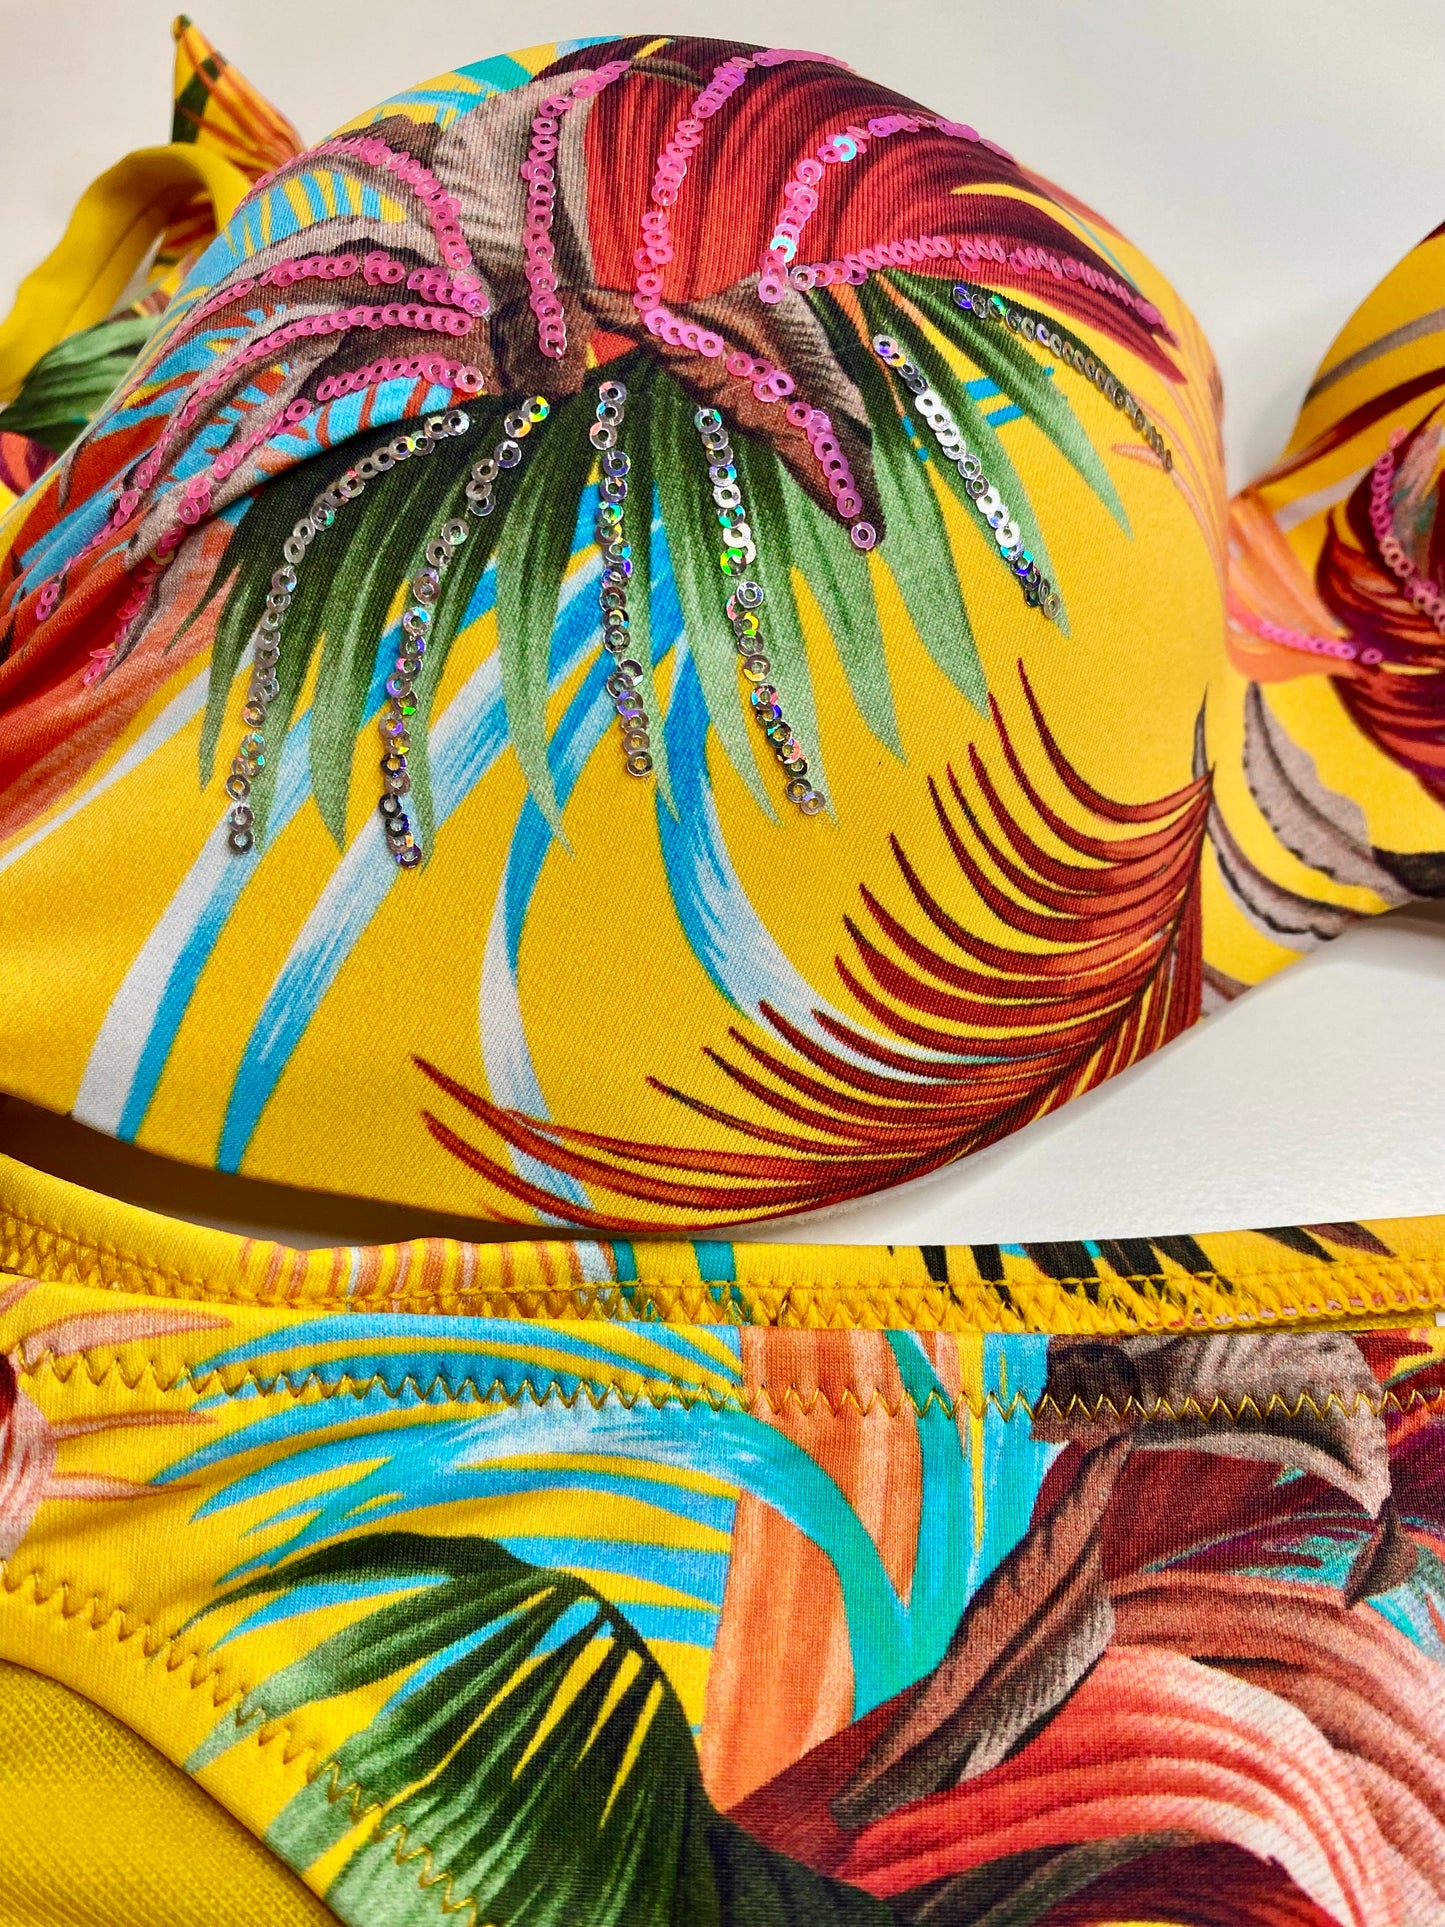 Tropic Glam Floral Bikini Set